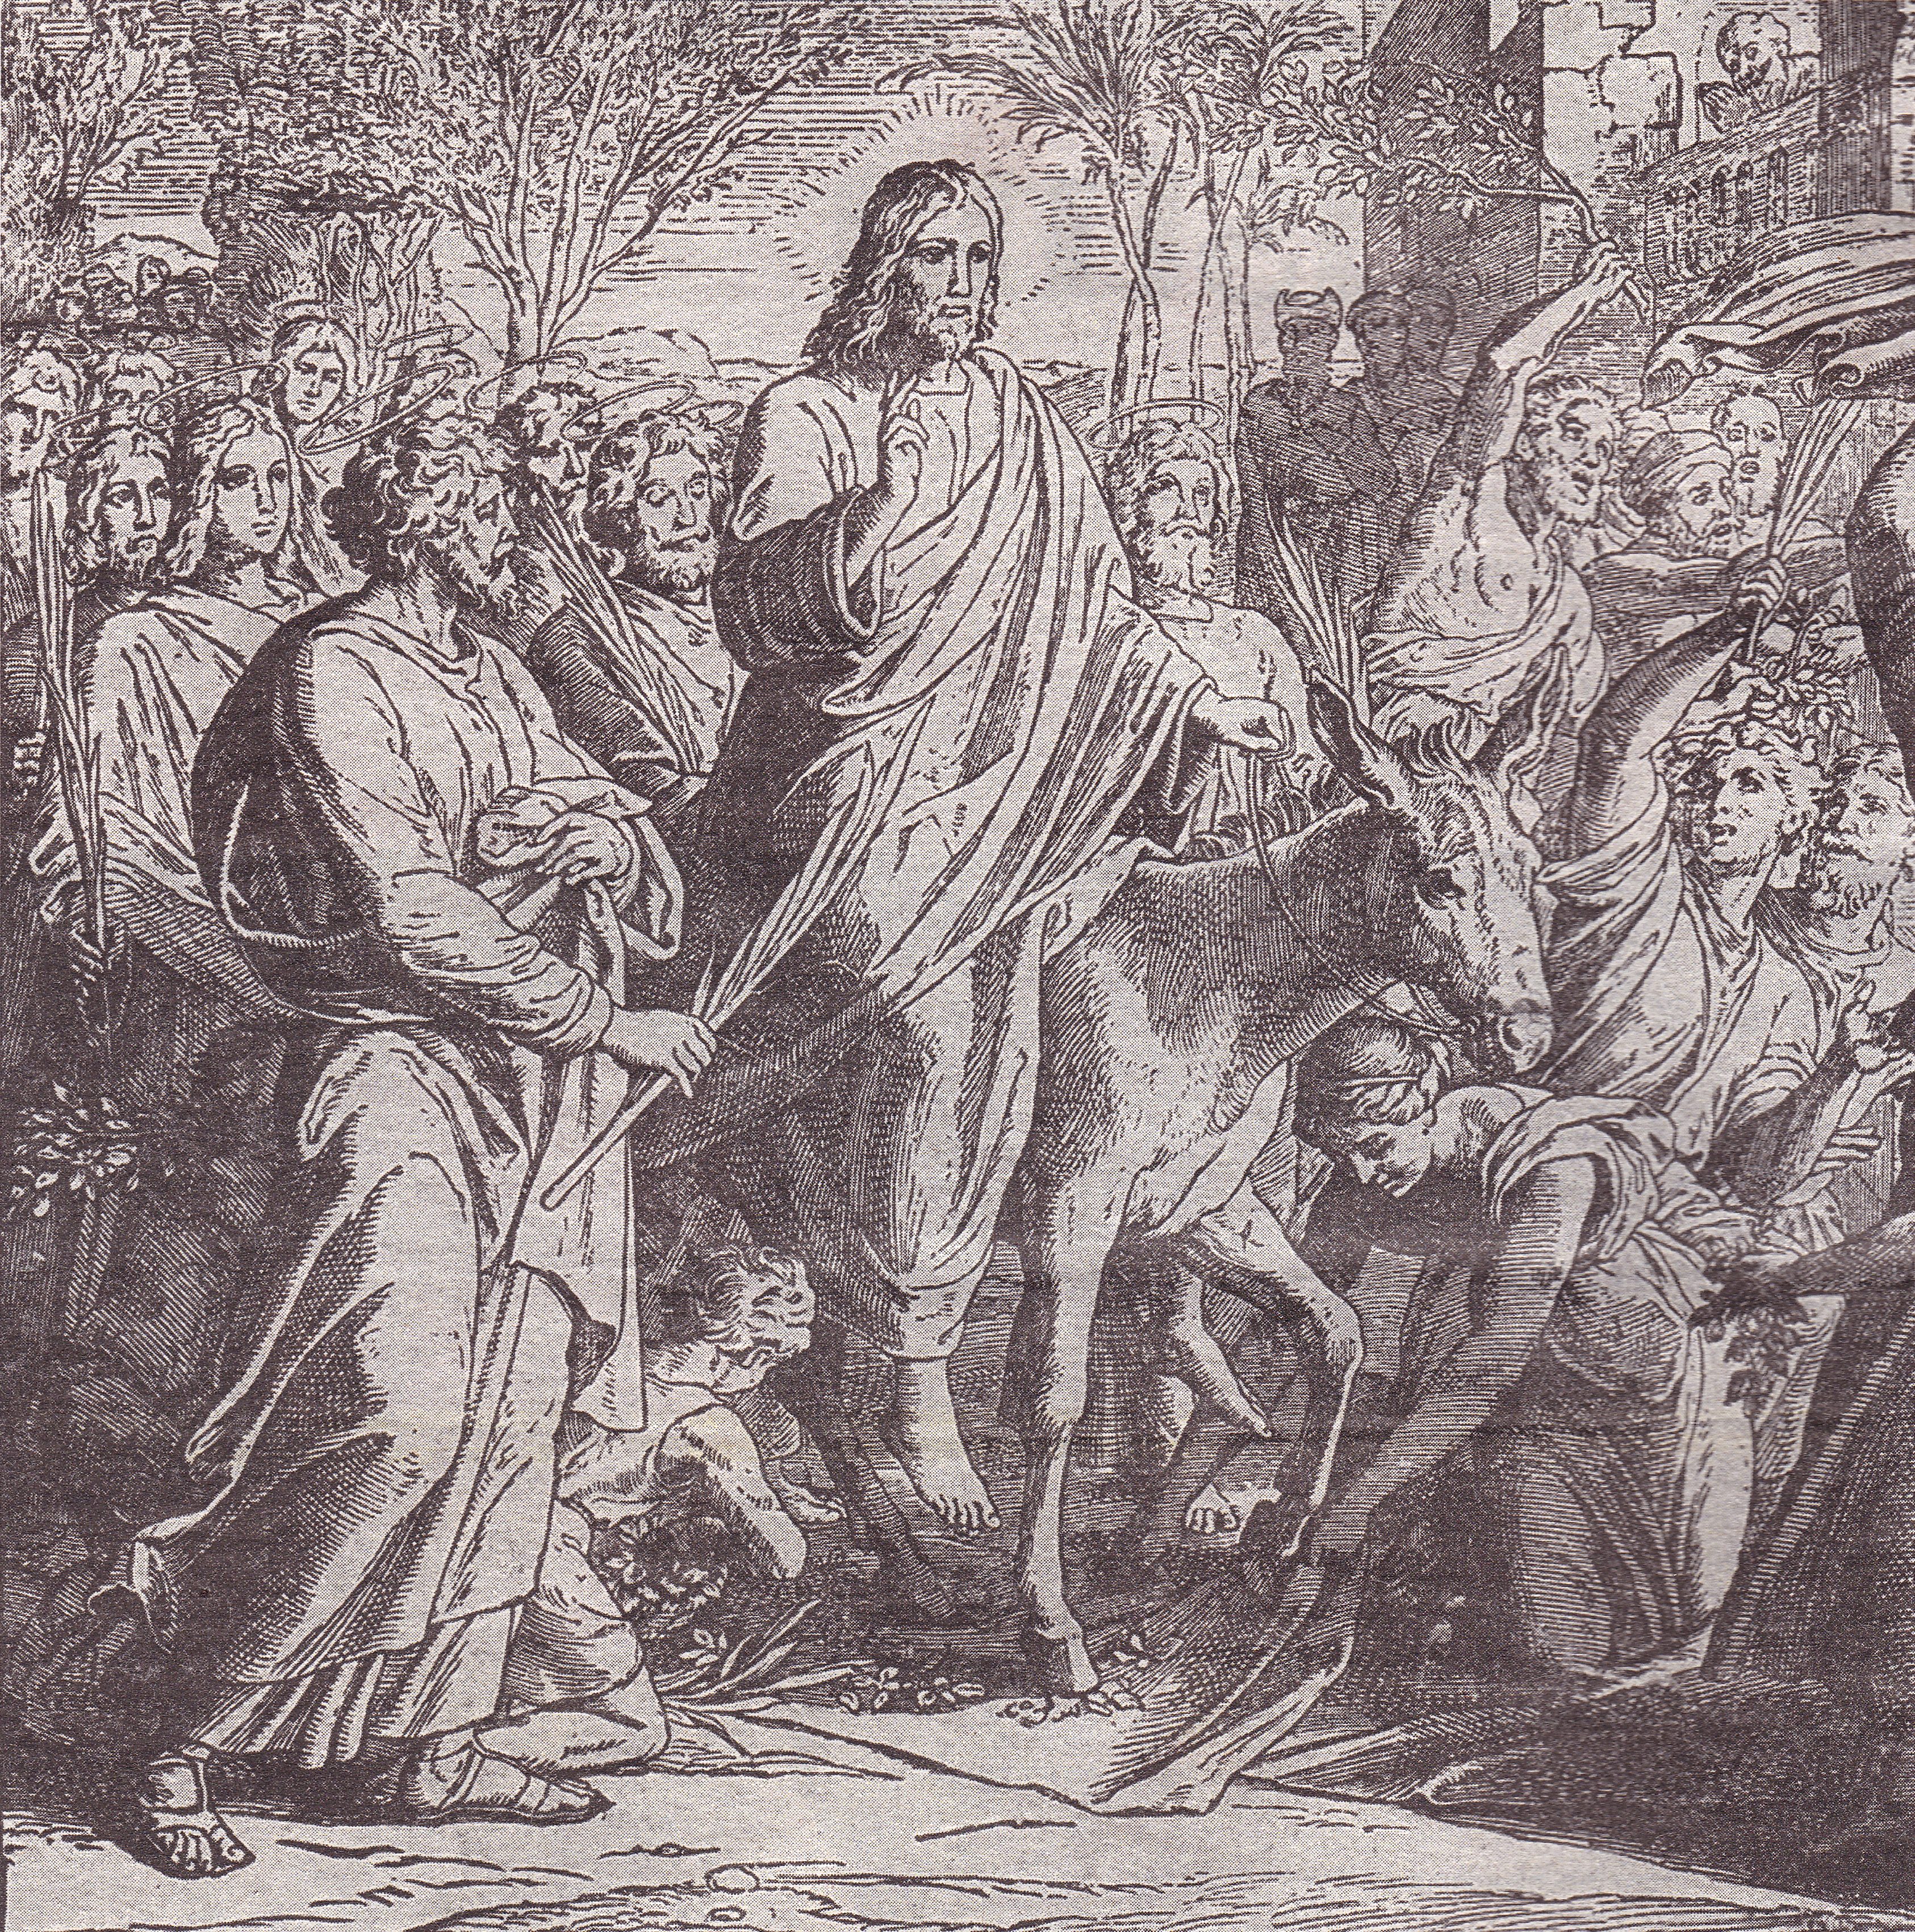 triumphal entry jesus painting